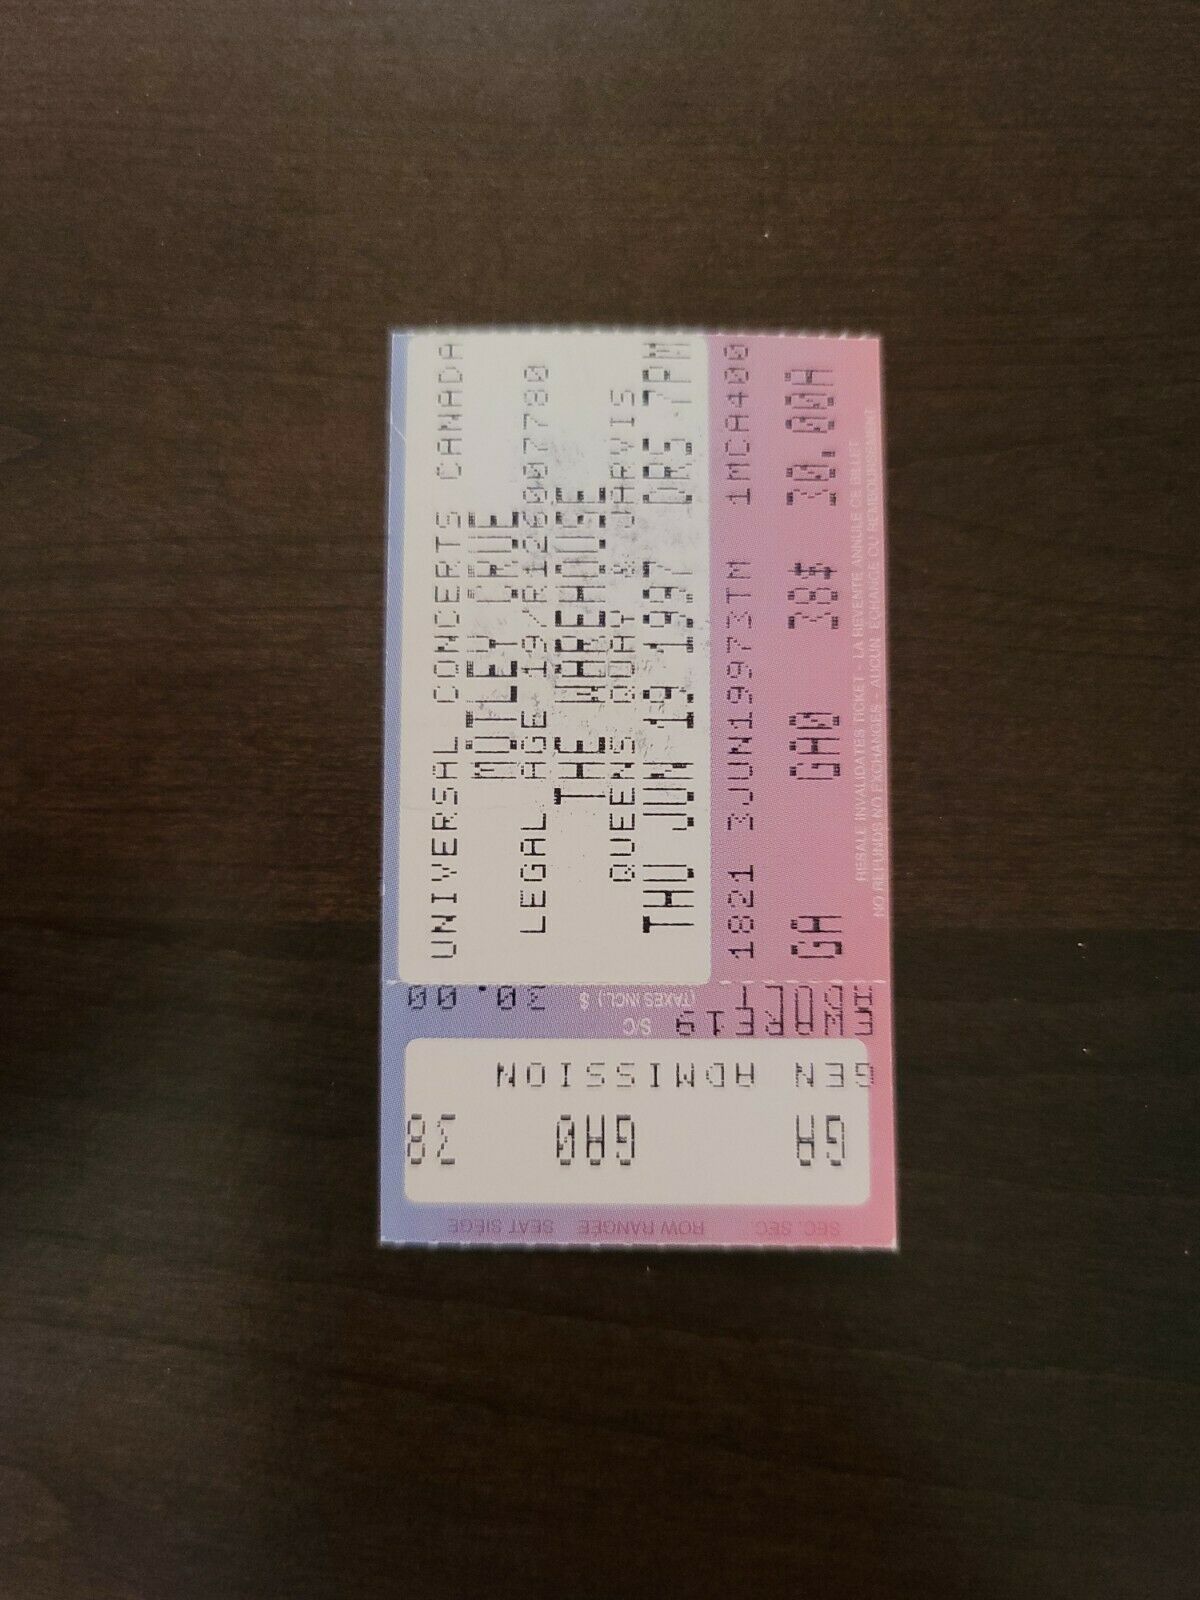 Motley Crue 1997, Toronto The Warehouse Original Concert Ticket Stub